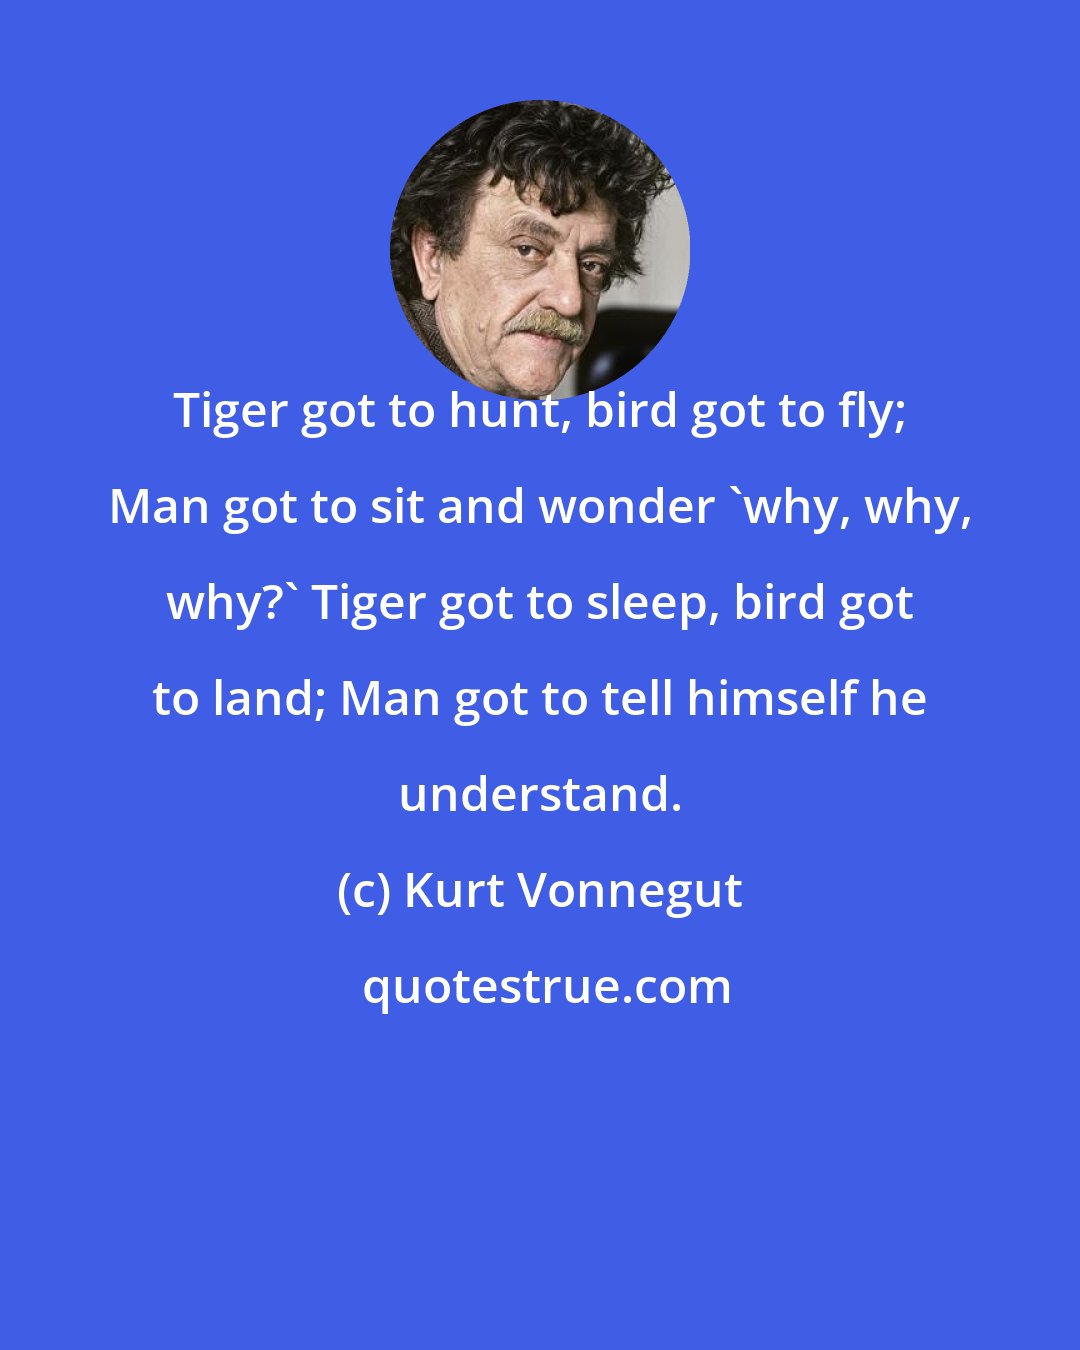 Kurt Vonnegut: Tiger got to hunt, bird got to fly; Man got to sit and wonder 'why, why, why?' Tiger got to sleep, bird got to land; Man got to tell himself he understand.